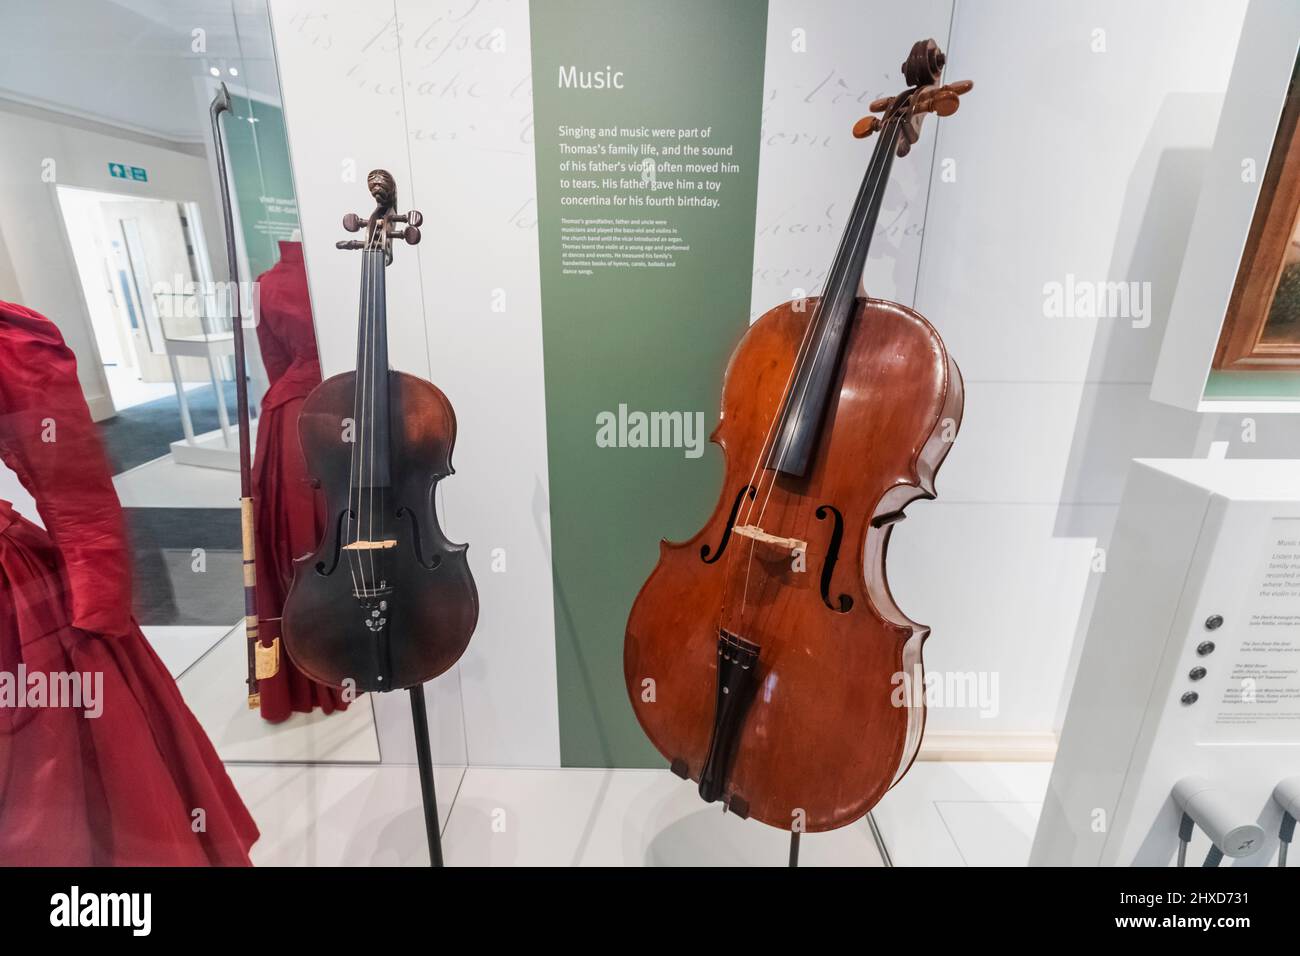 England, Dorset, Dorchester, Dorset Museum, Exhibit of Thomas Hardy's Violin and Bass Viol Stock Photo